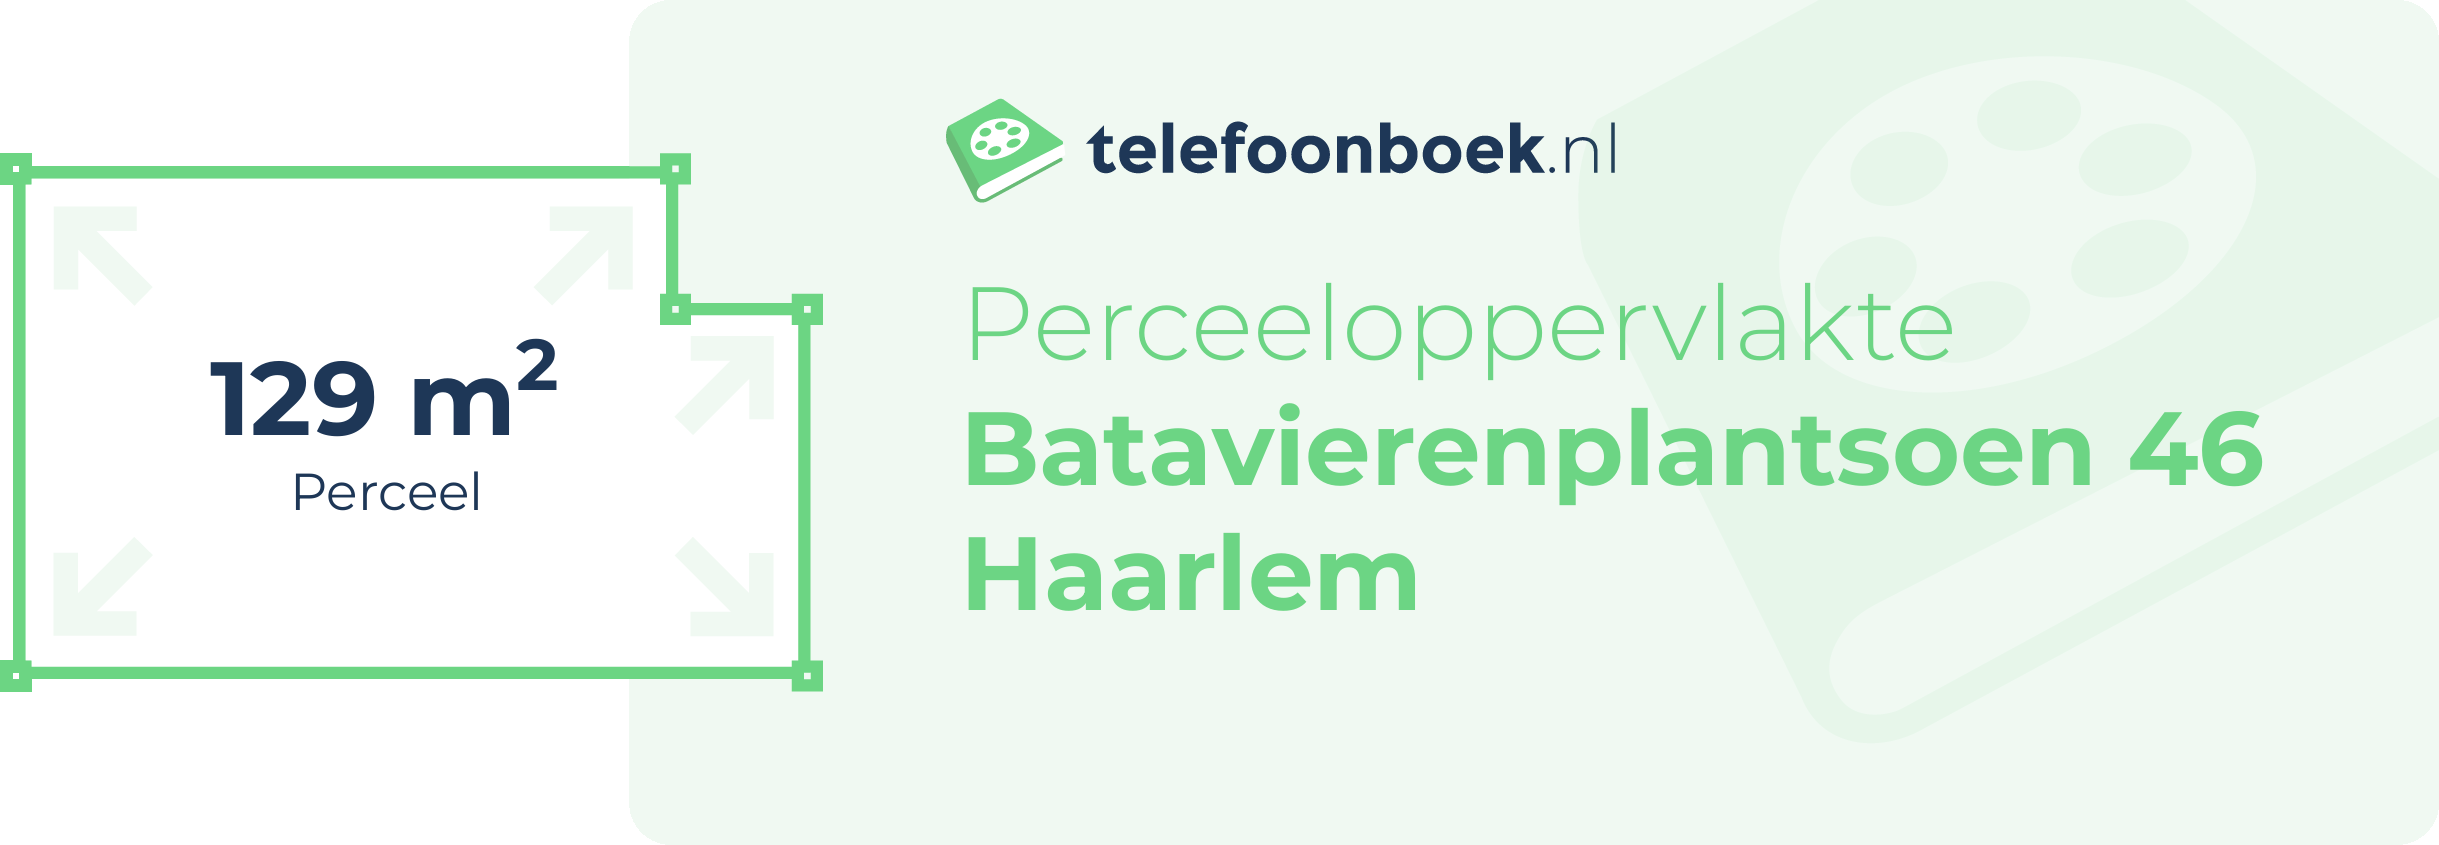 Perceeloppervlakte Batavierenplantsoen 46 Haarlem